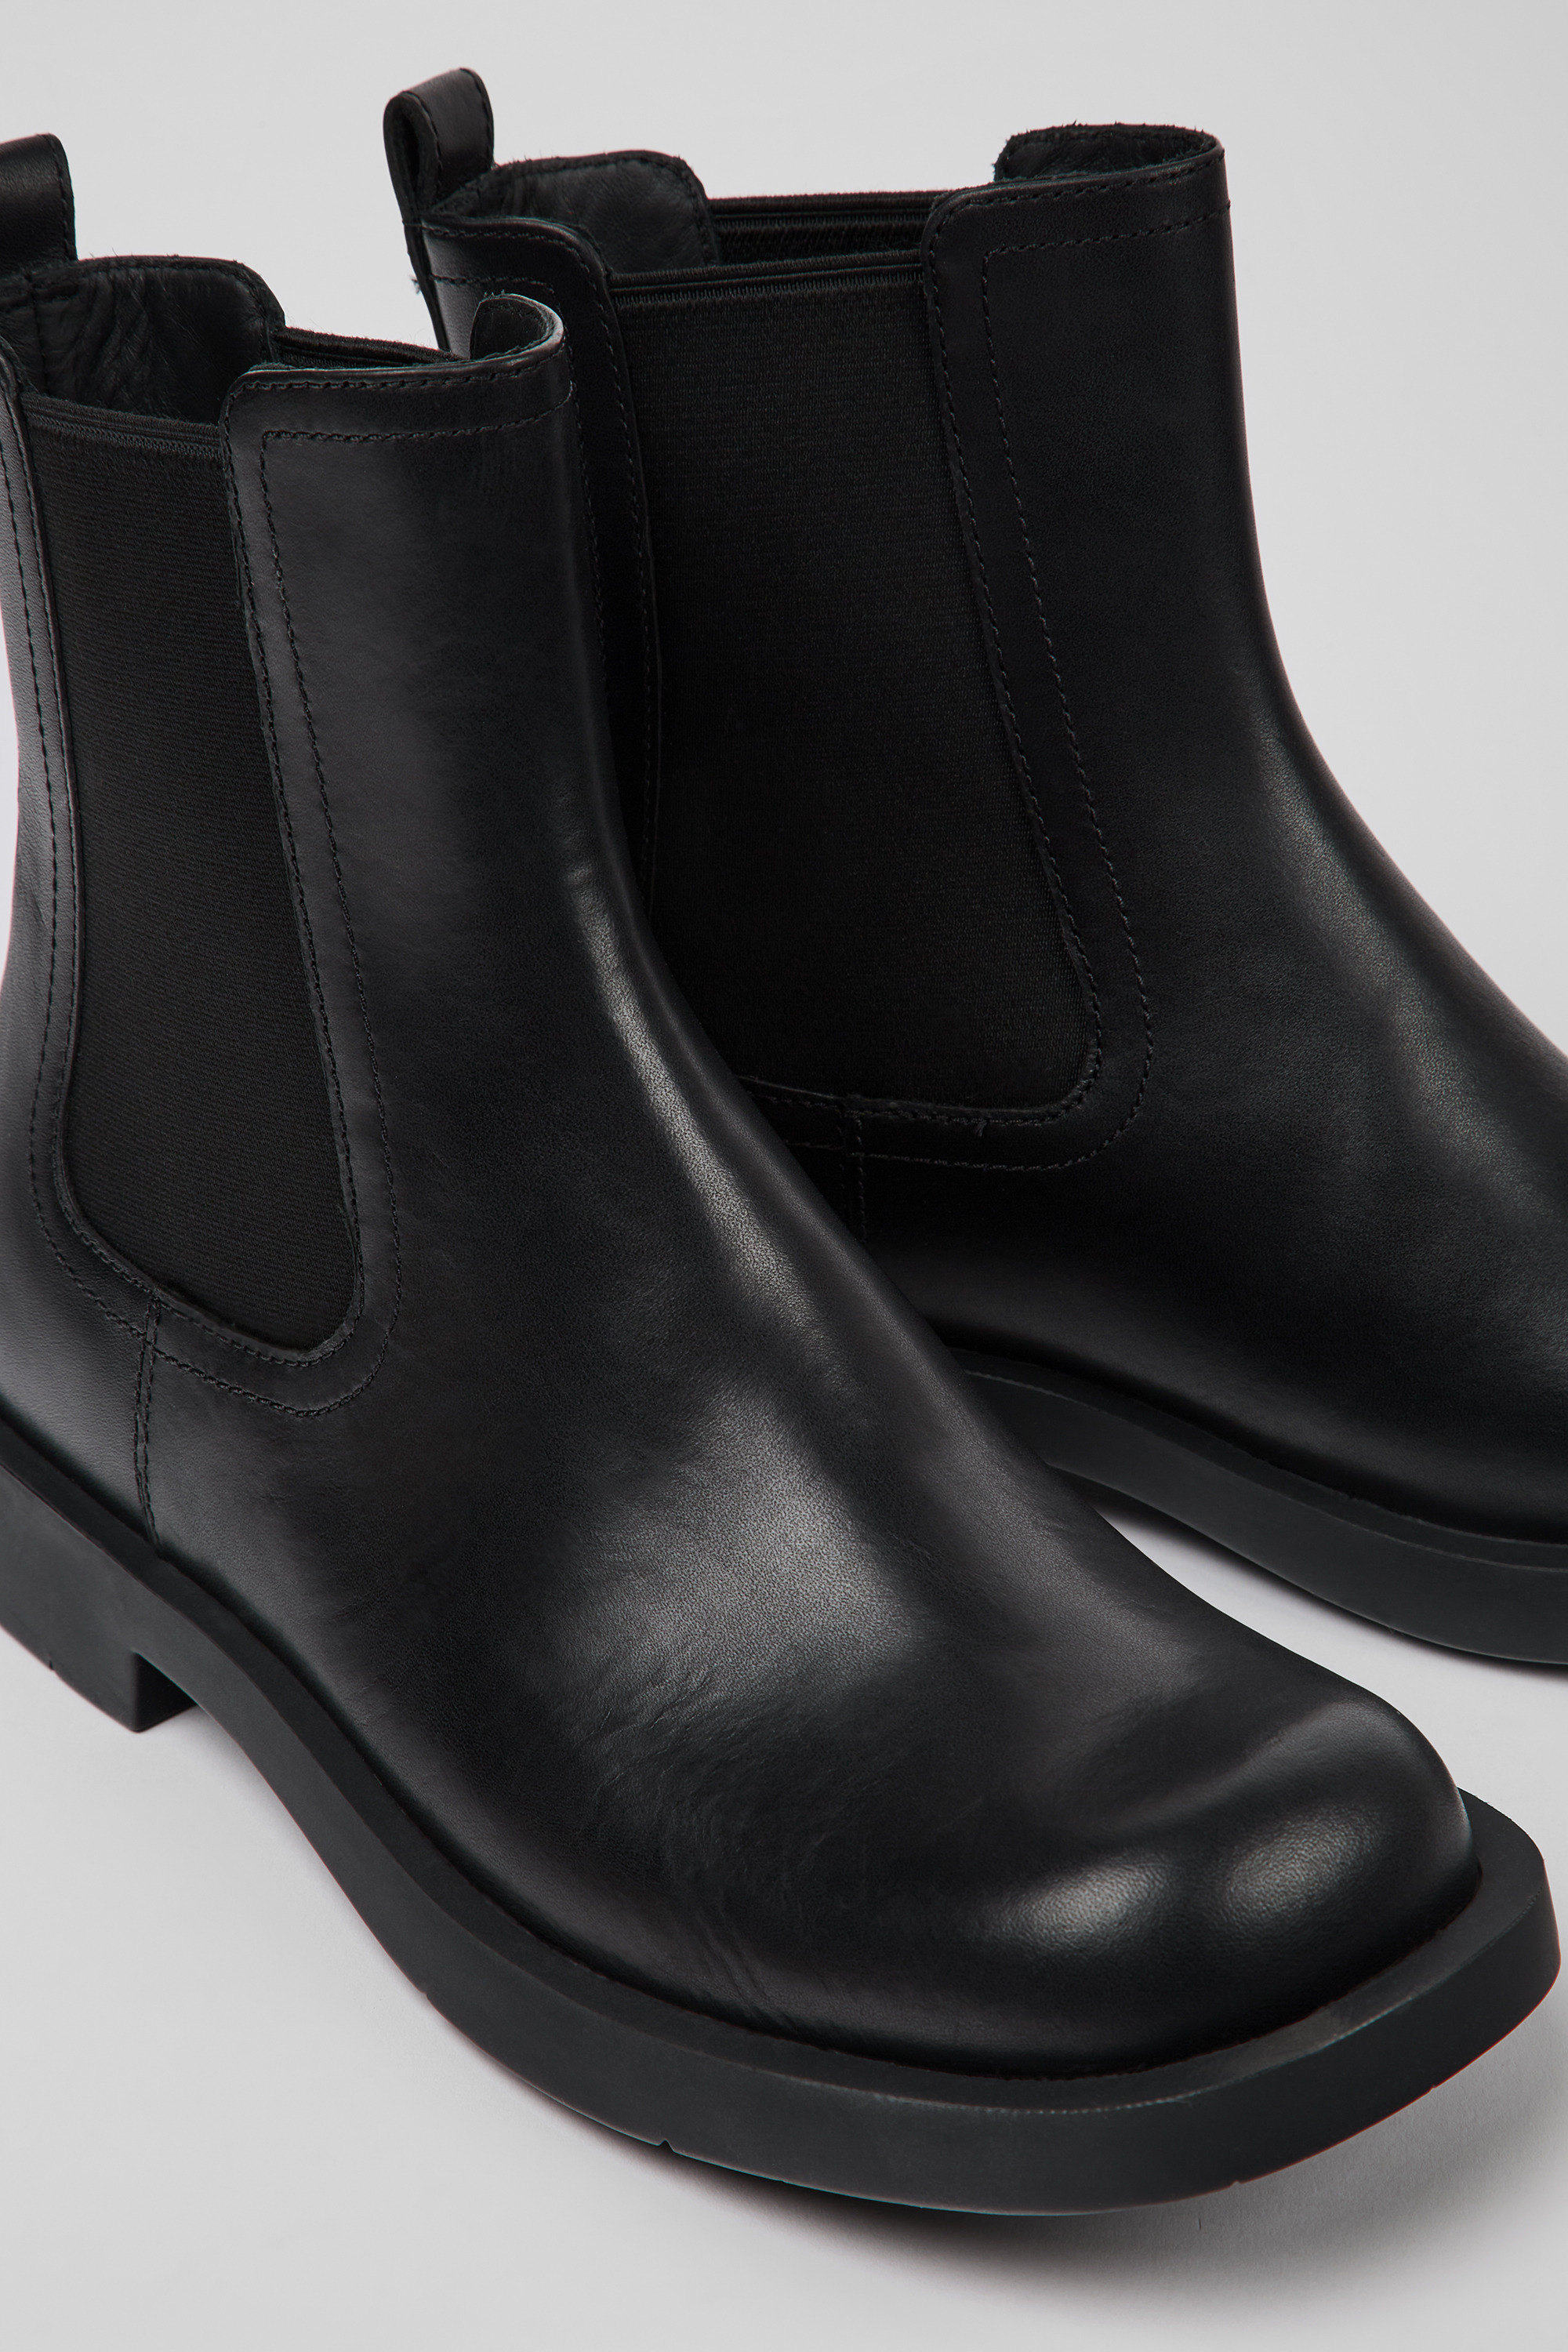 Afvise Profeti forfængelighed Neuman Black Ankle Boots for Men - Autumn/Winter collection - Camper USA